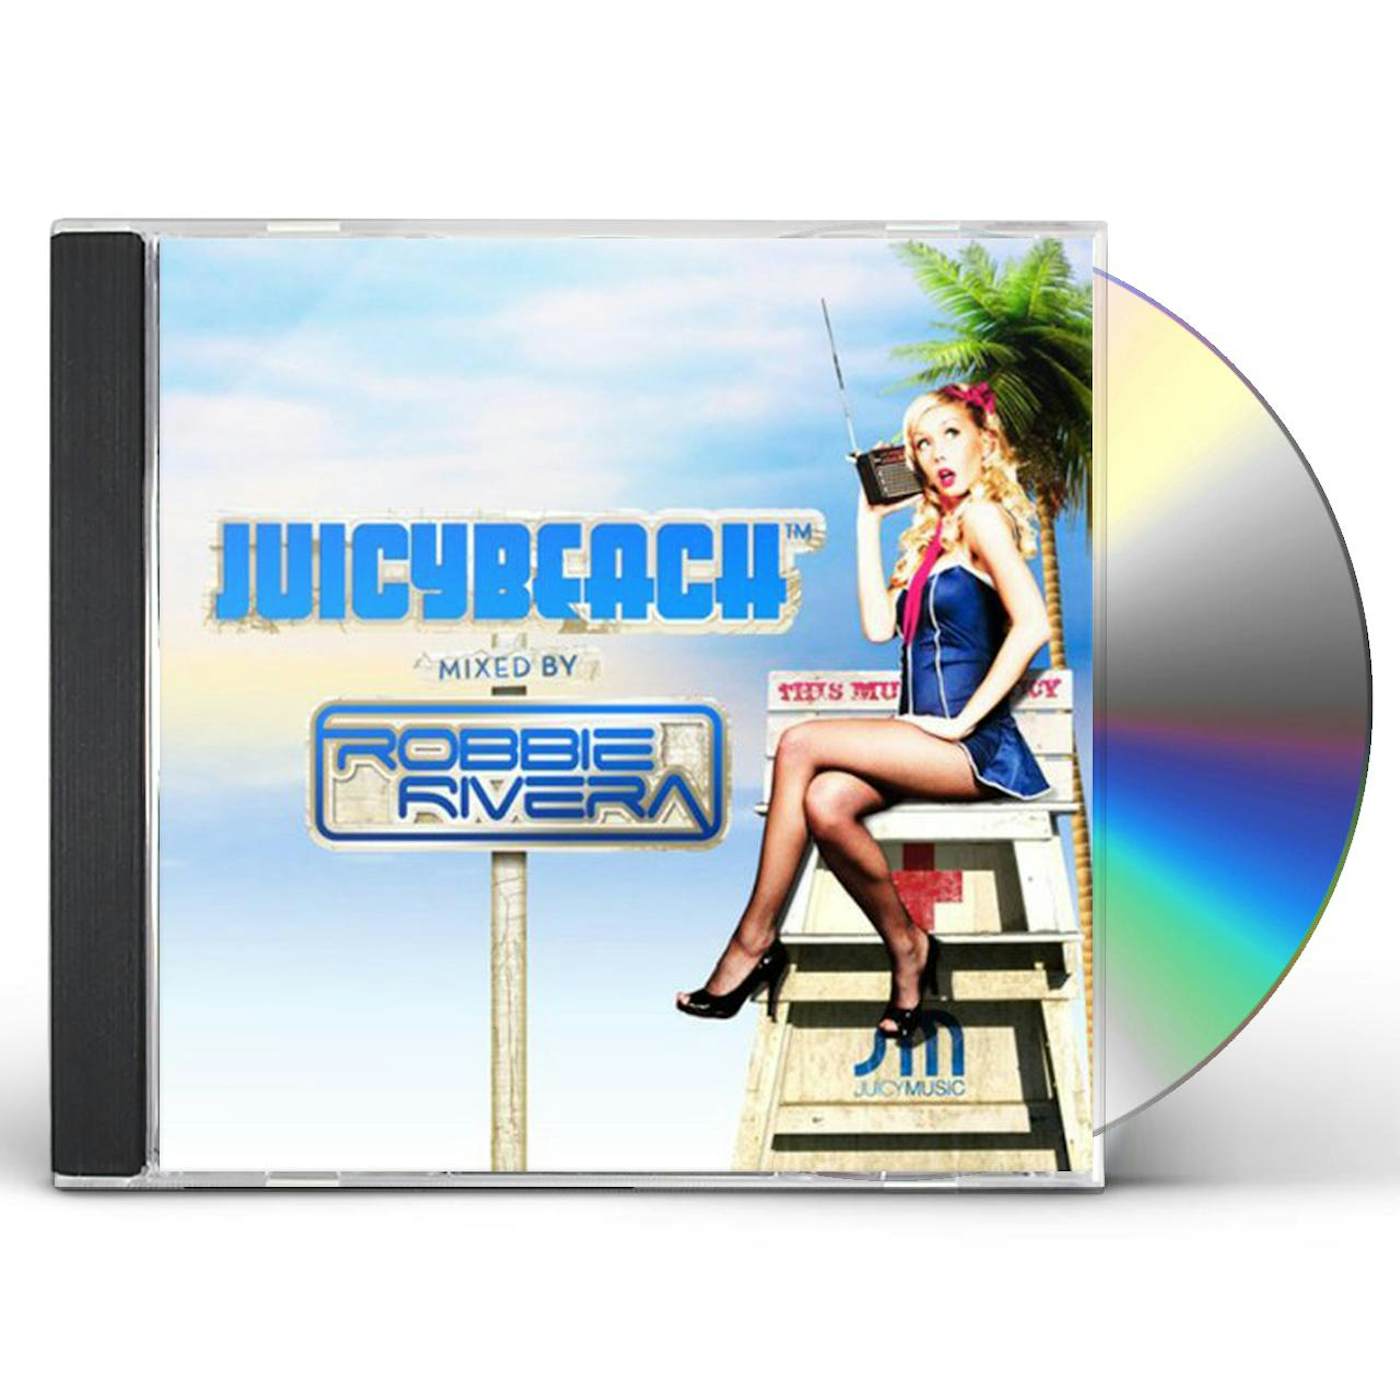 Robbie Rivera JUICY BEACH CD